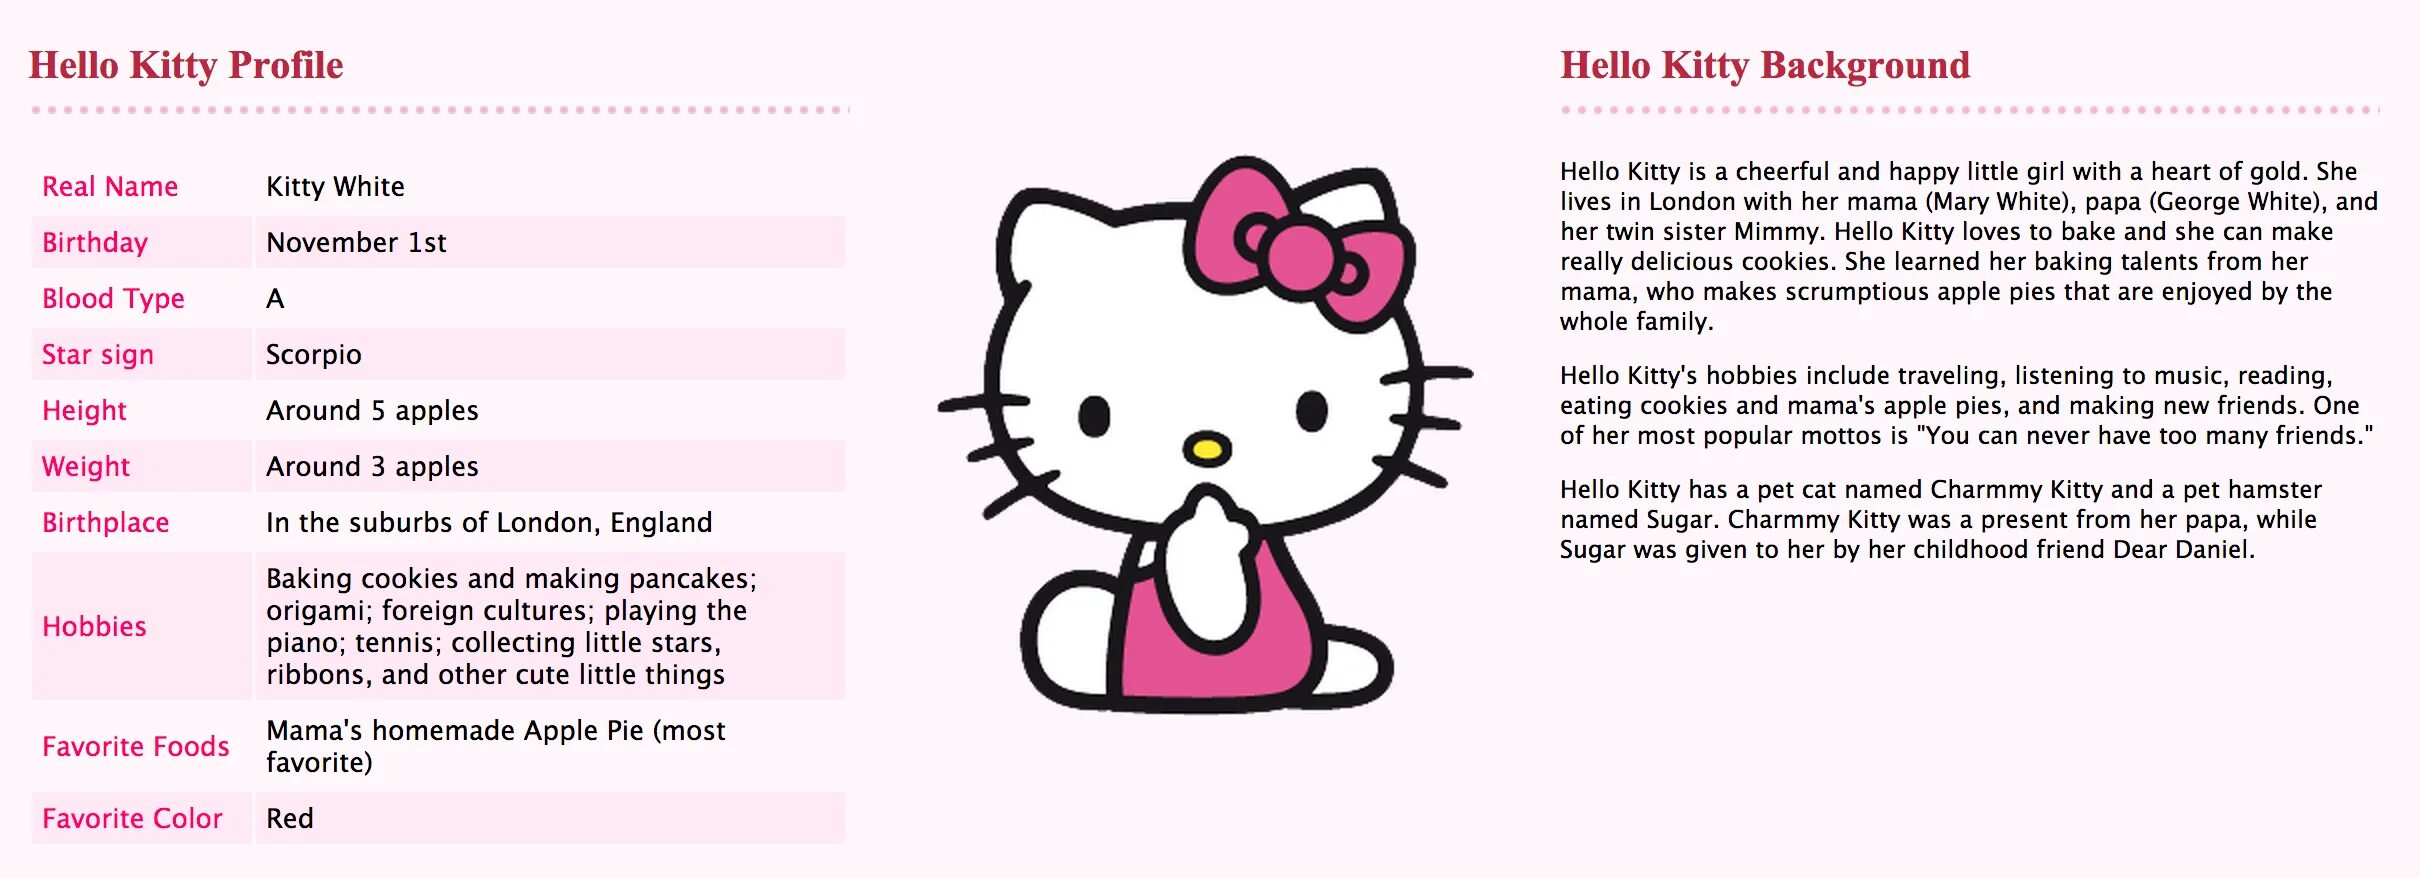 Хеллоу Китти имена. Hello Kitty персонажи с именами. Hello Kitty с описанием. Хеллоу Китти и друзья имена. Hello kitty имя